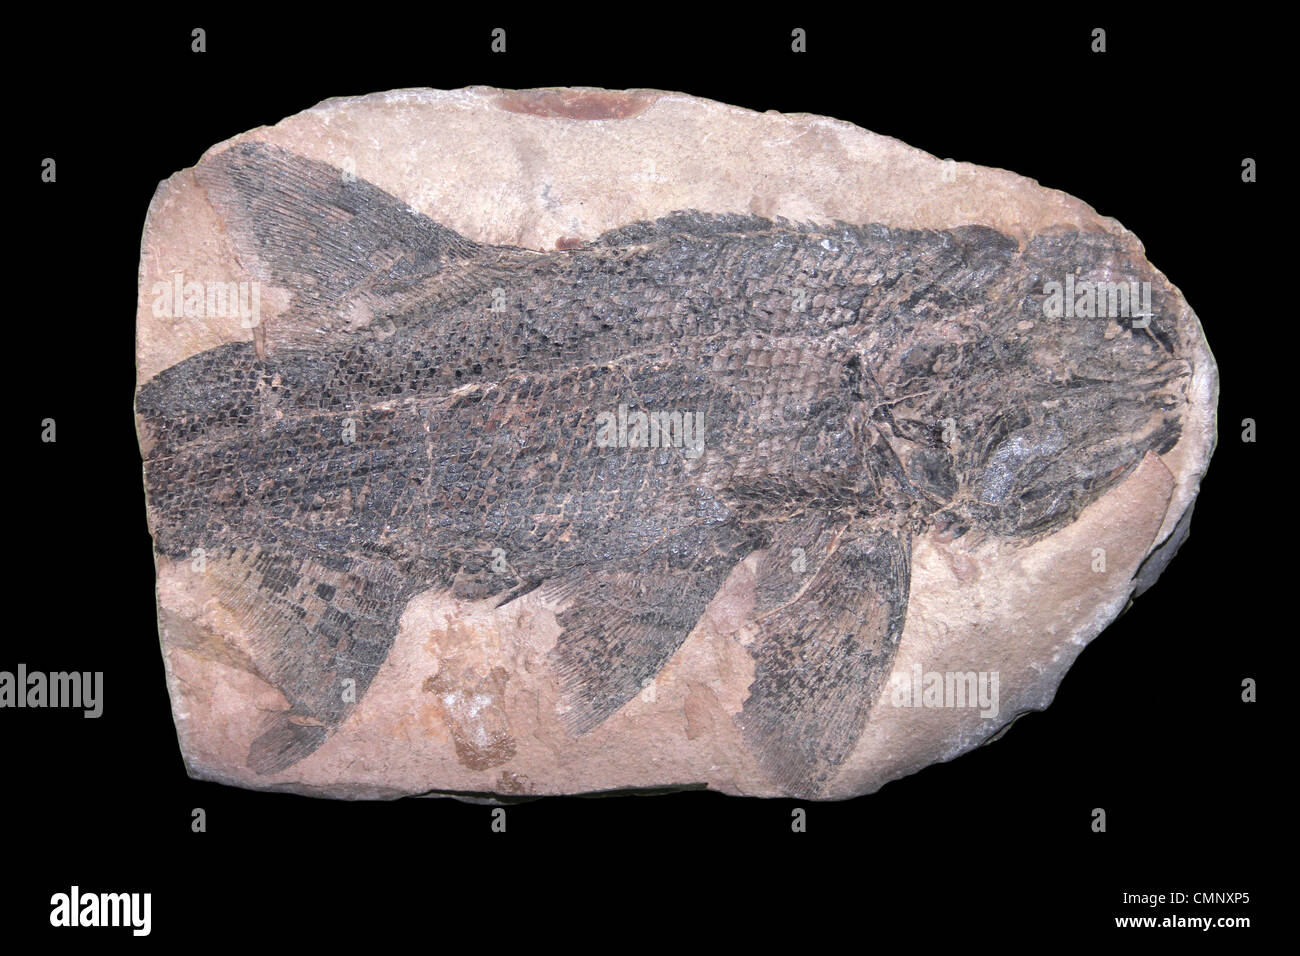 Amblypterus sp. Un preistorico estinto pesce osseo Foto Stock